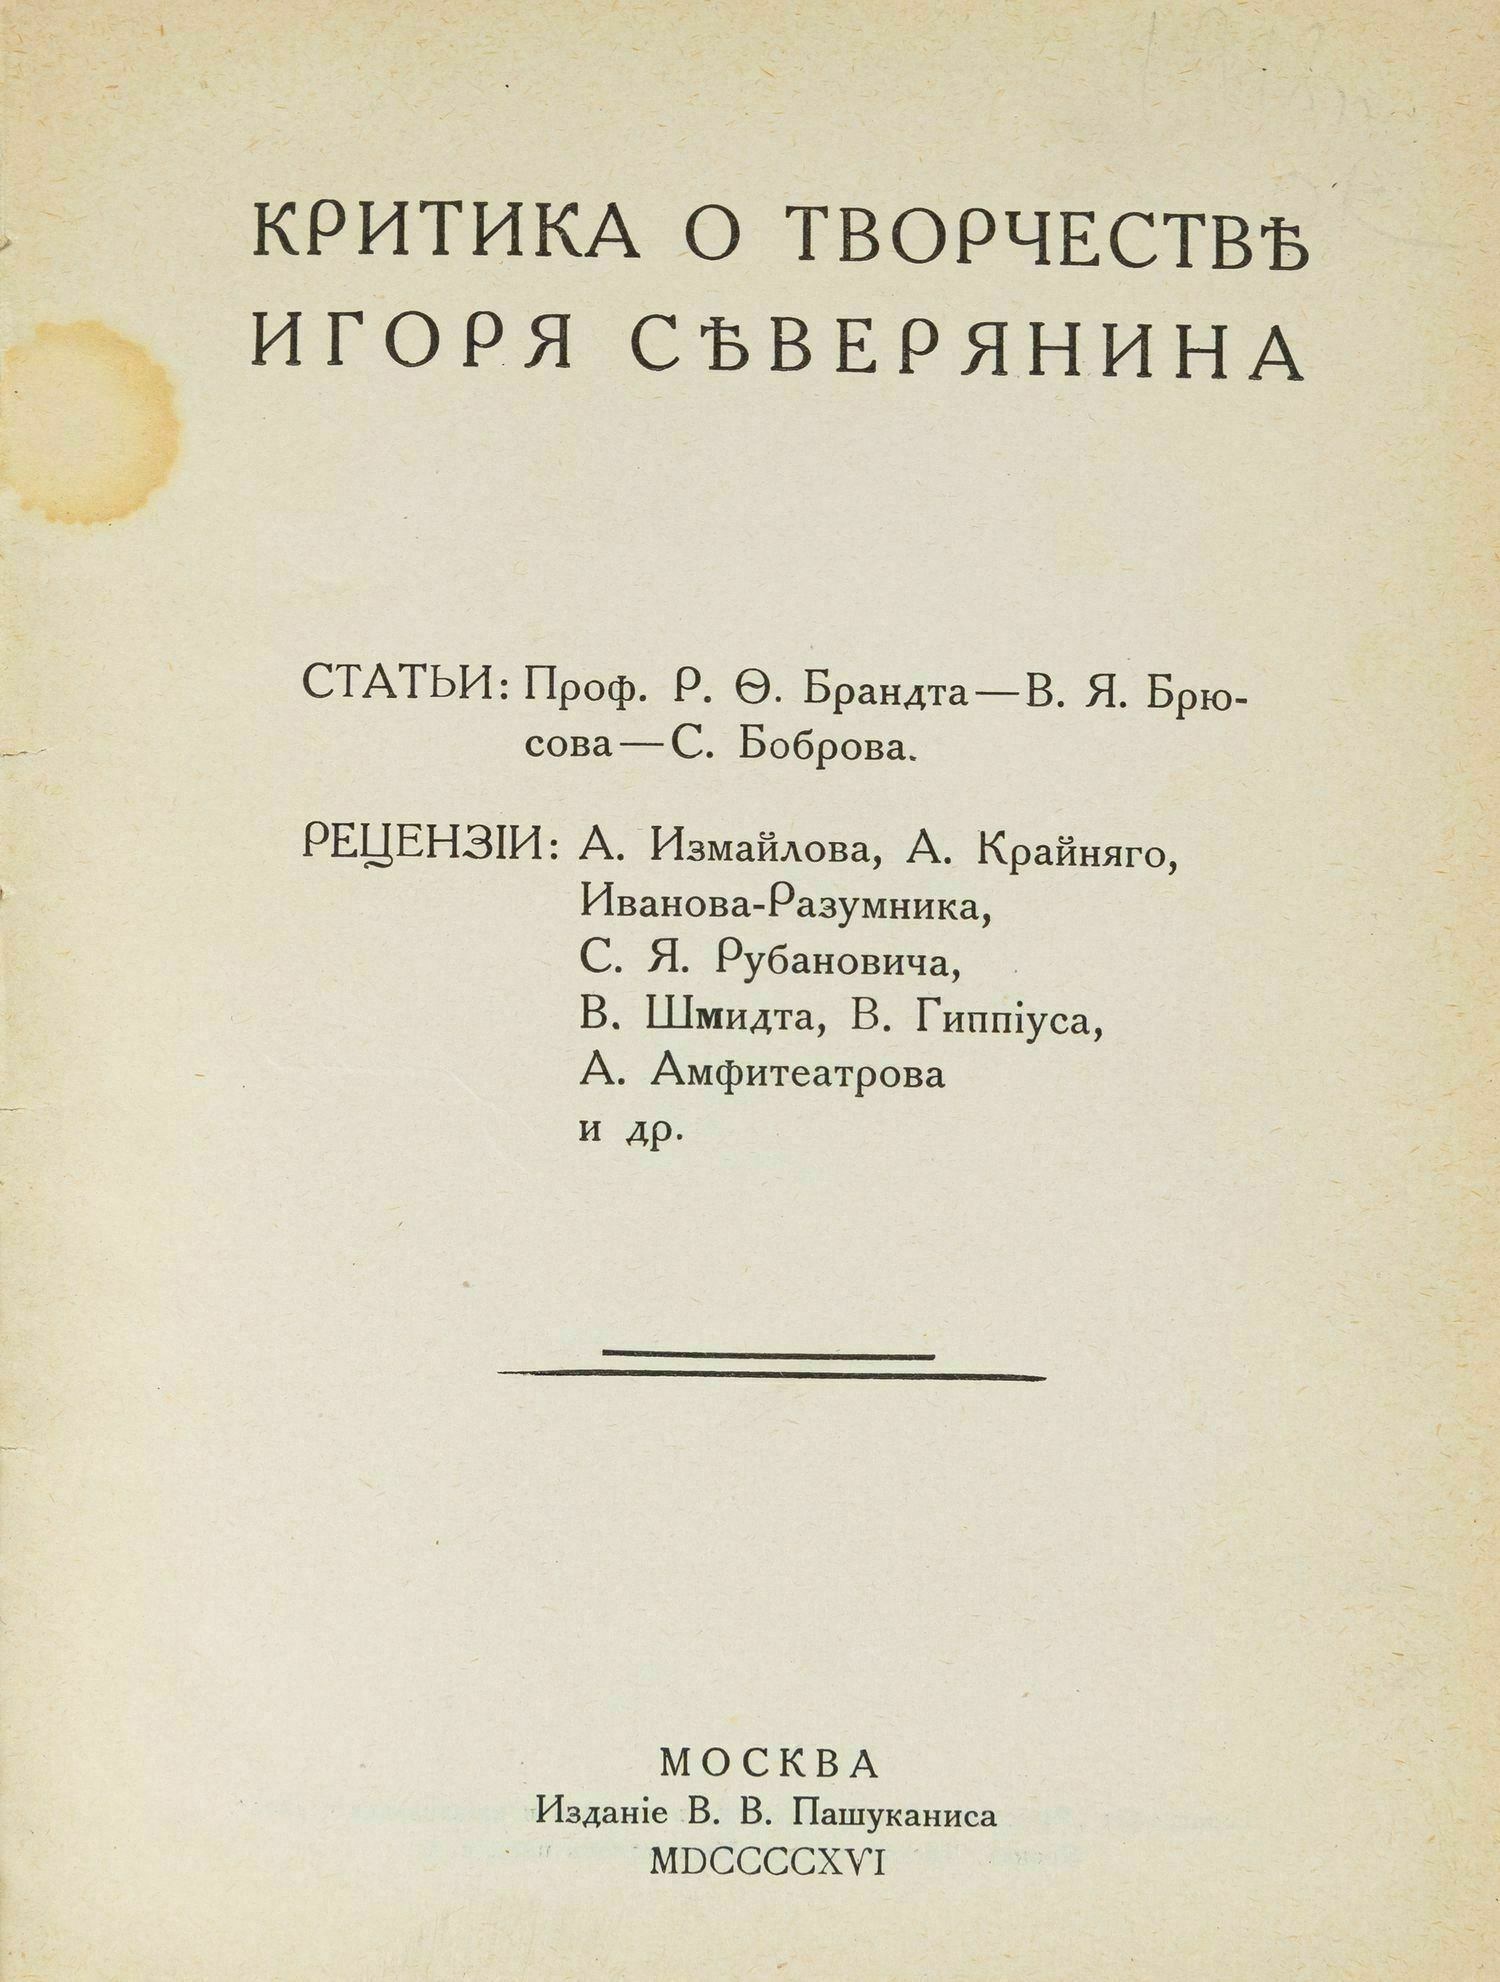 Критика о творчестве Игоря Северянина (М., 1916).